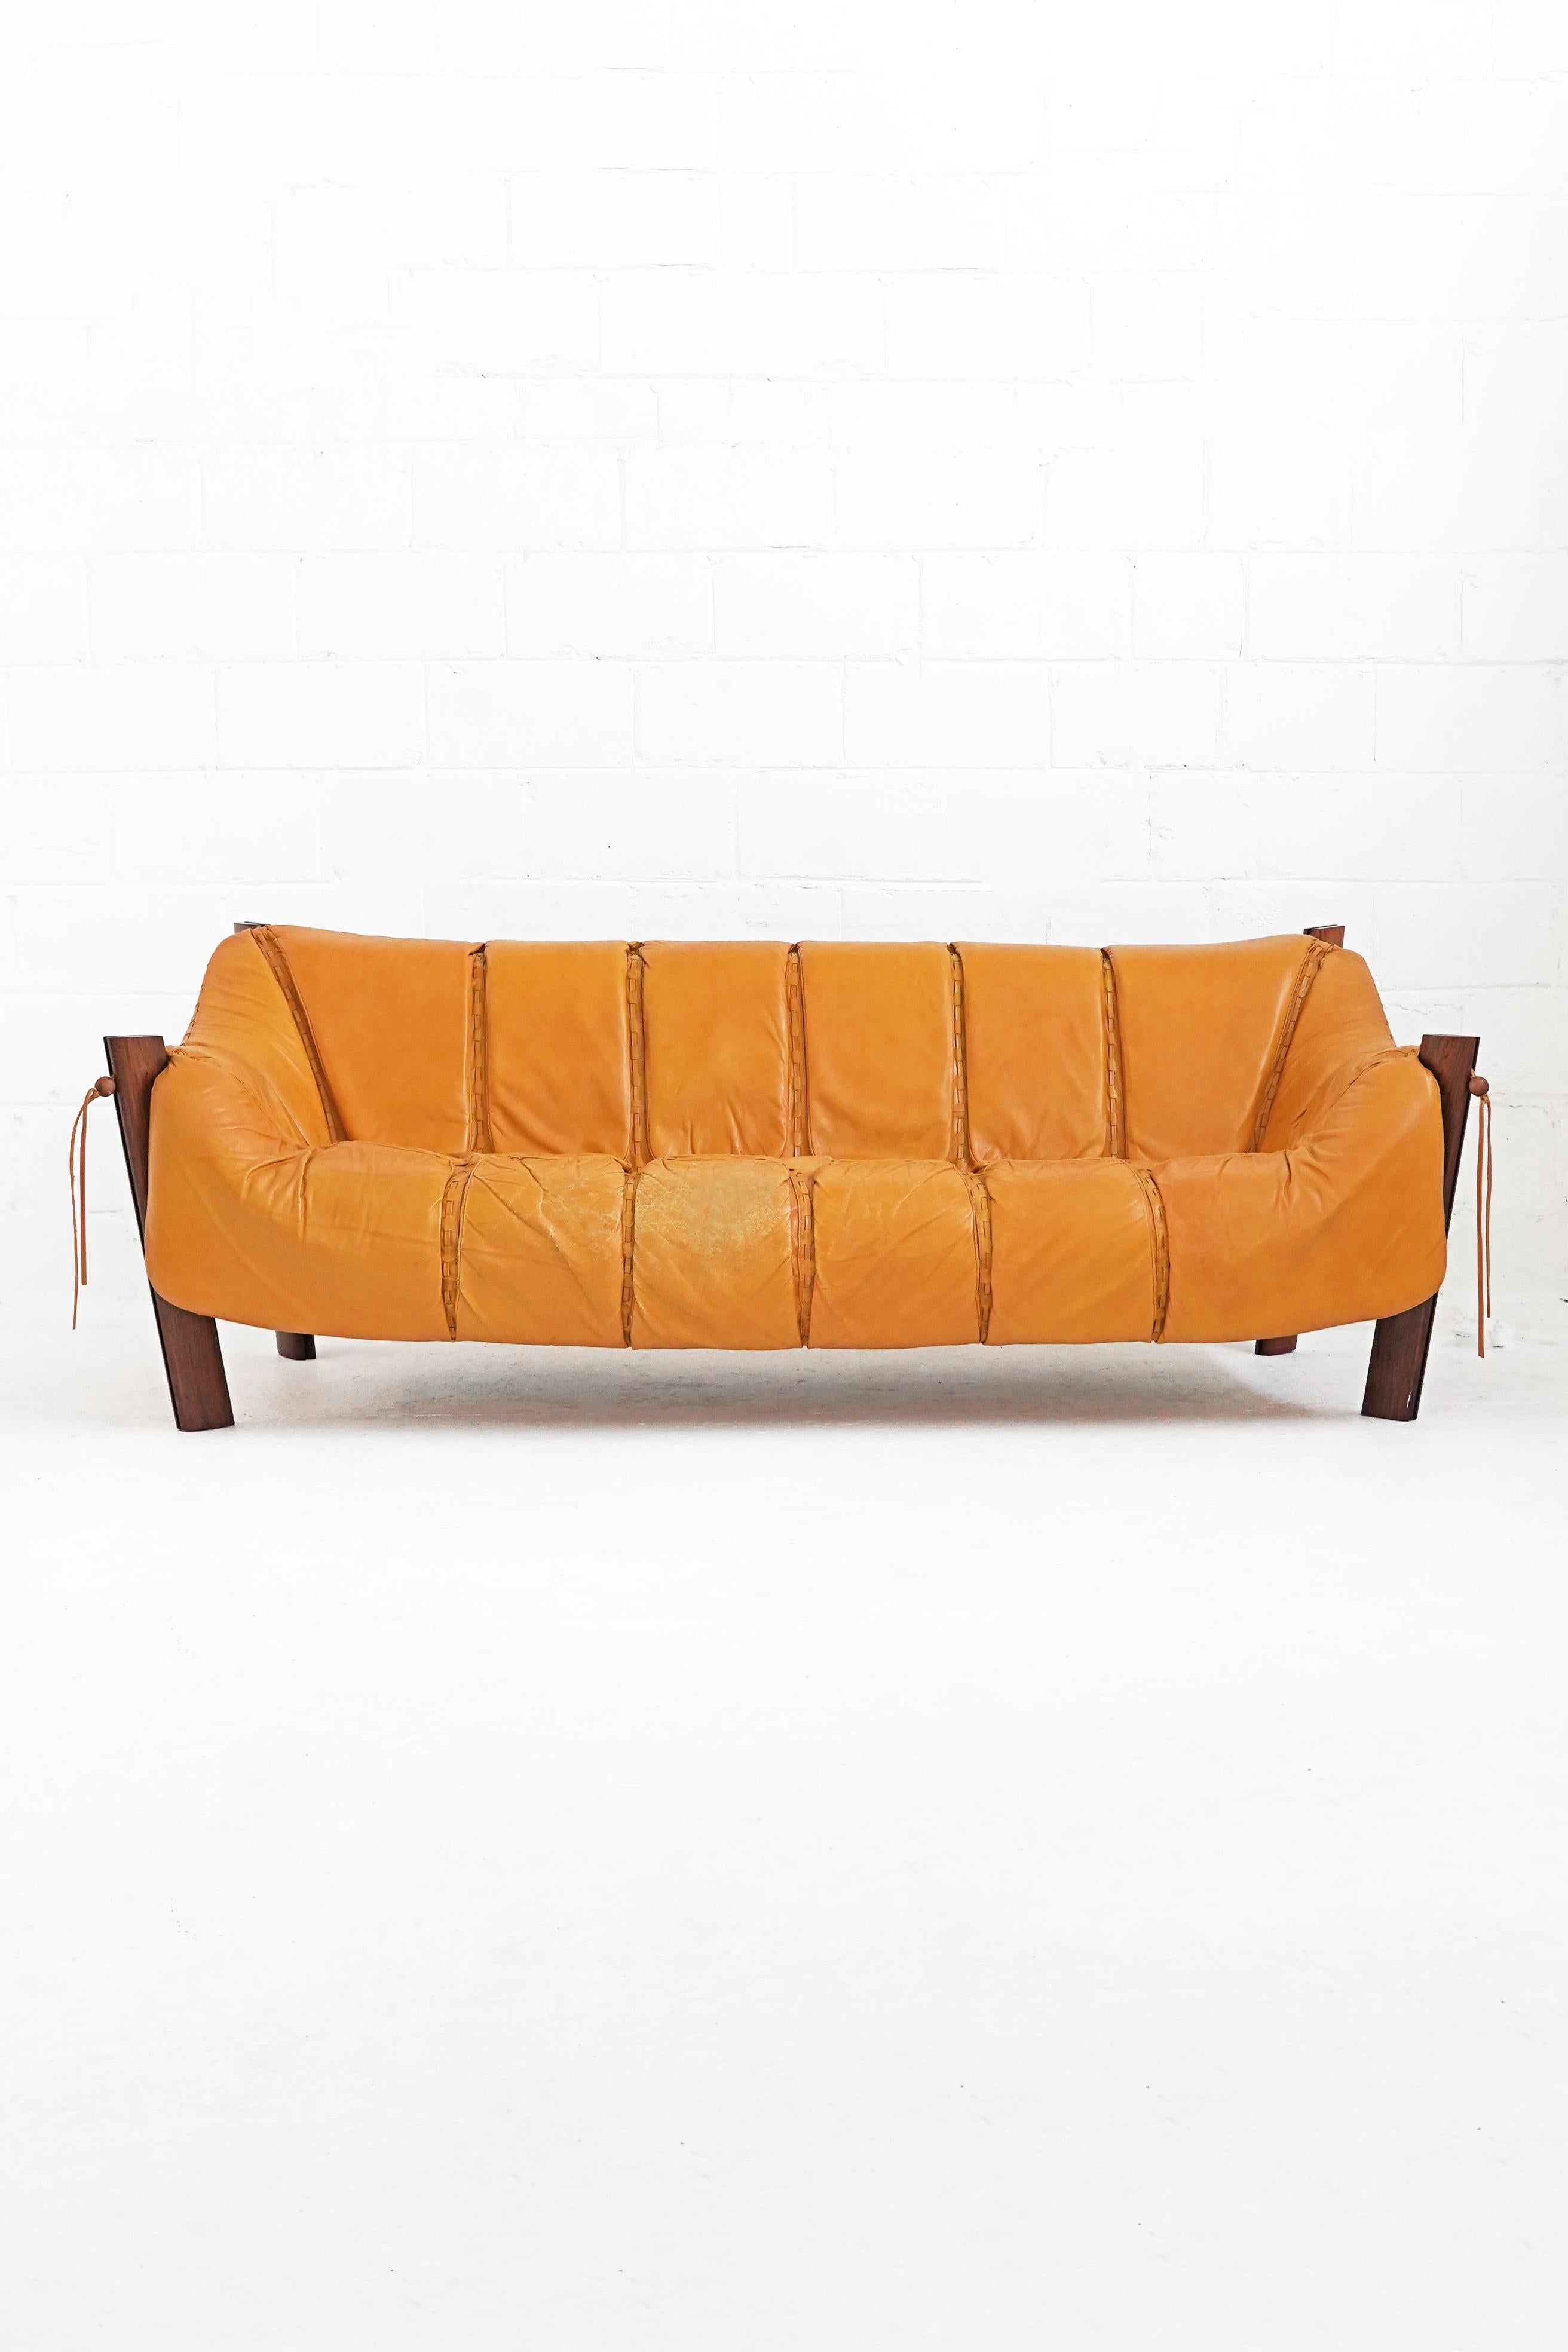 MP-211 Sofa in Leather by Brazilian Designer Percival Lafer for Móveis Lafer 5